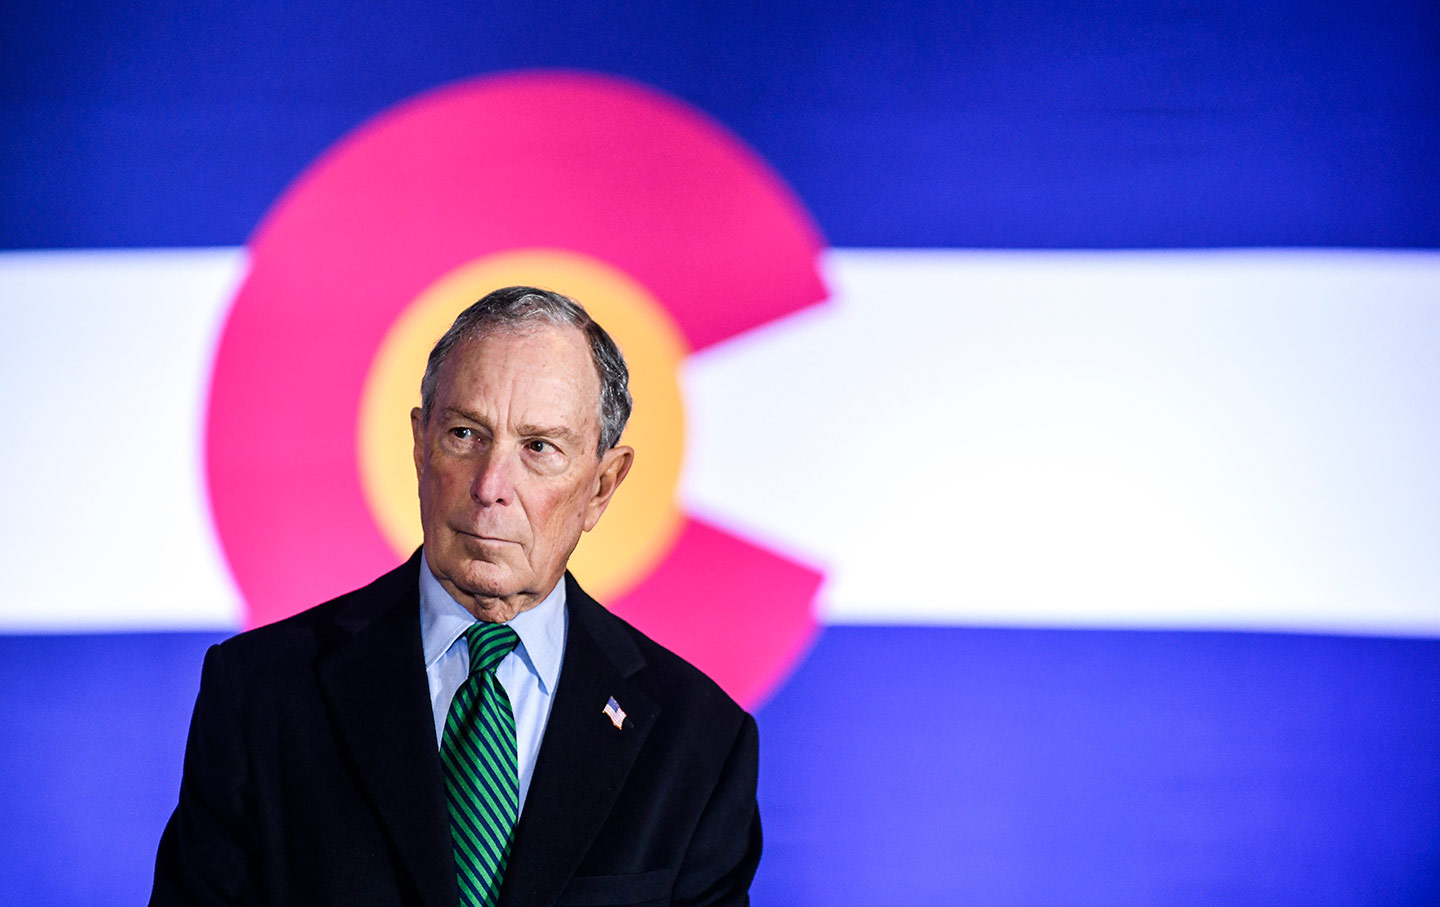 Michael Bloomberg Has an Anti-Democratic Streak